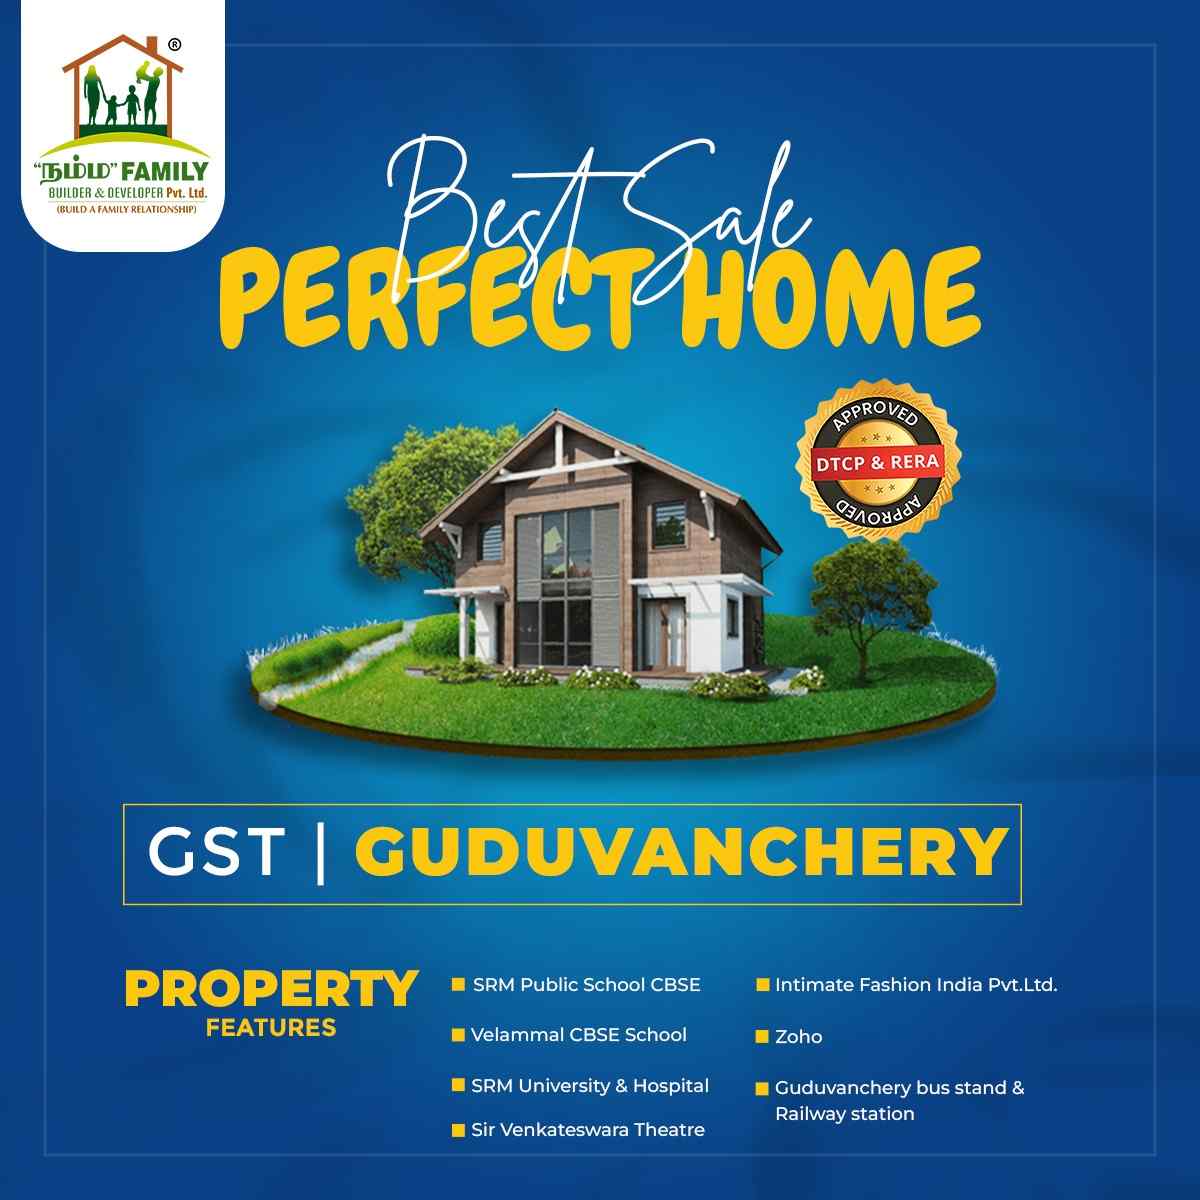 Guduvanchery Properties Cover Image - Namma Family Builder